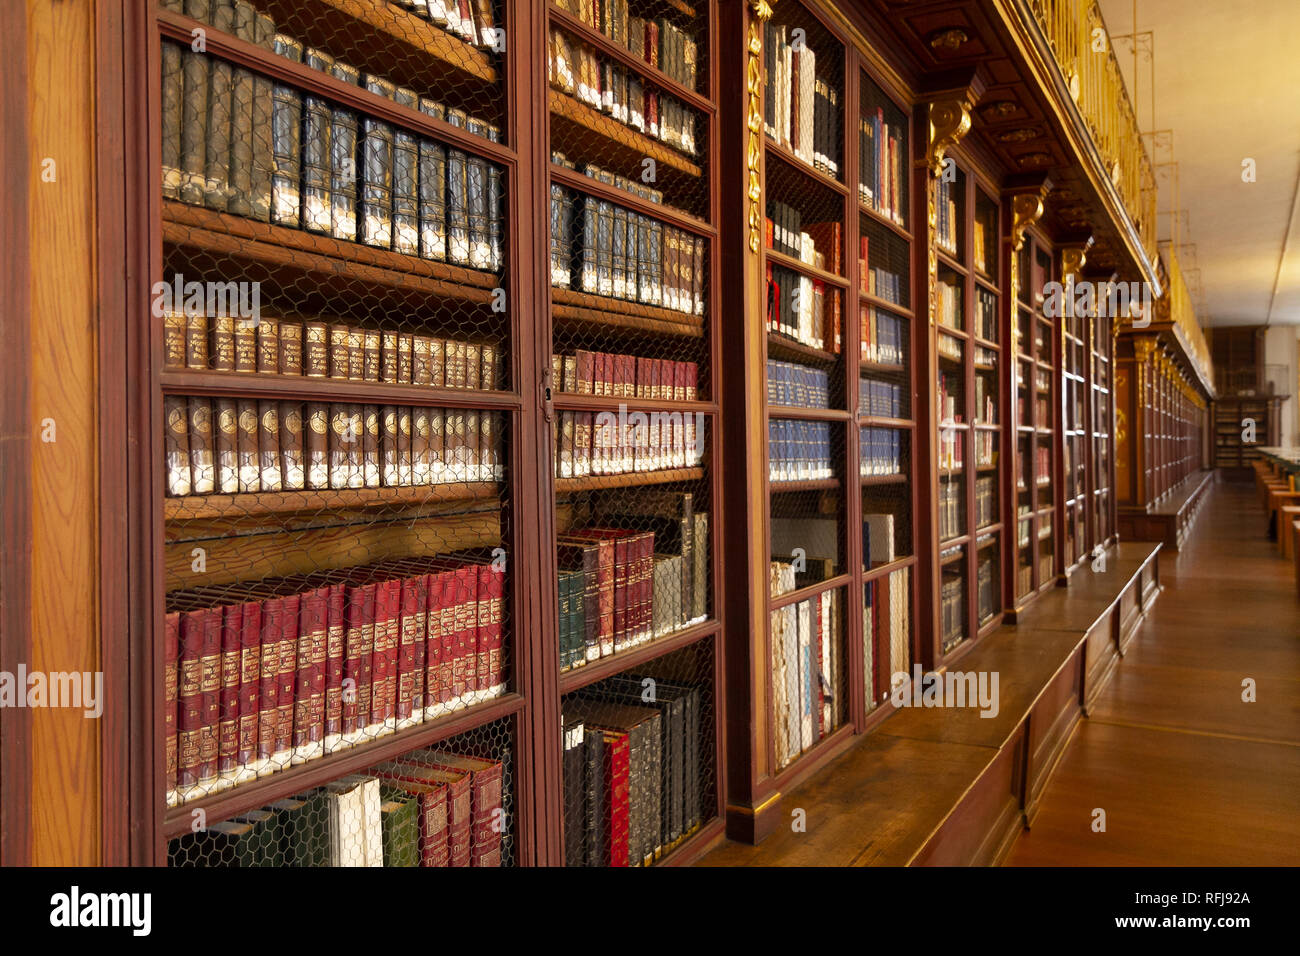 Antique University Library interior. Bookshelf with ancient books Stock Photo